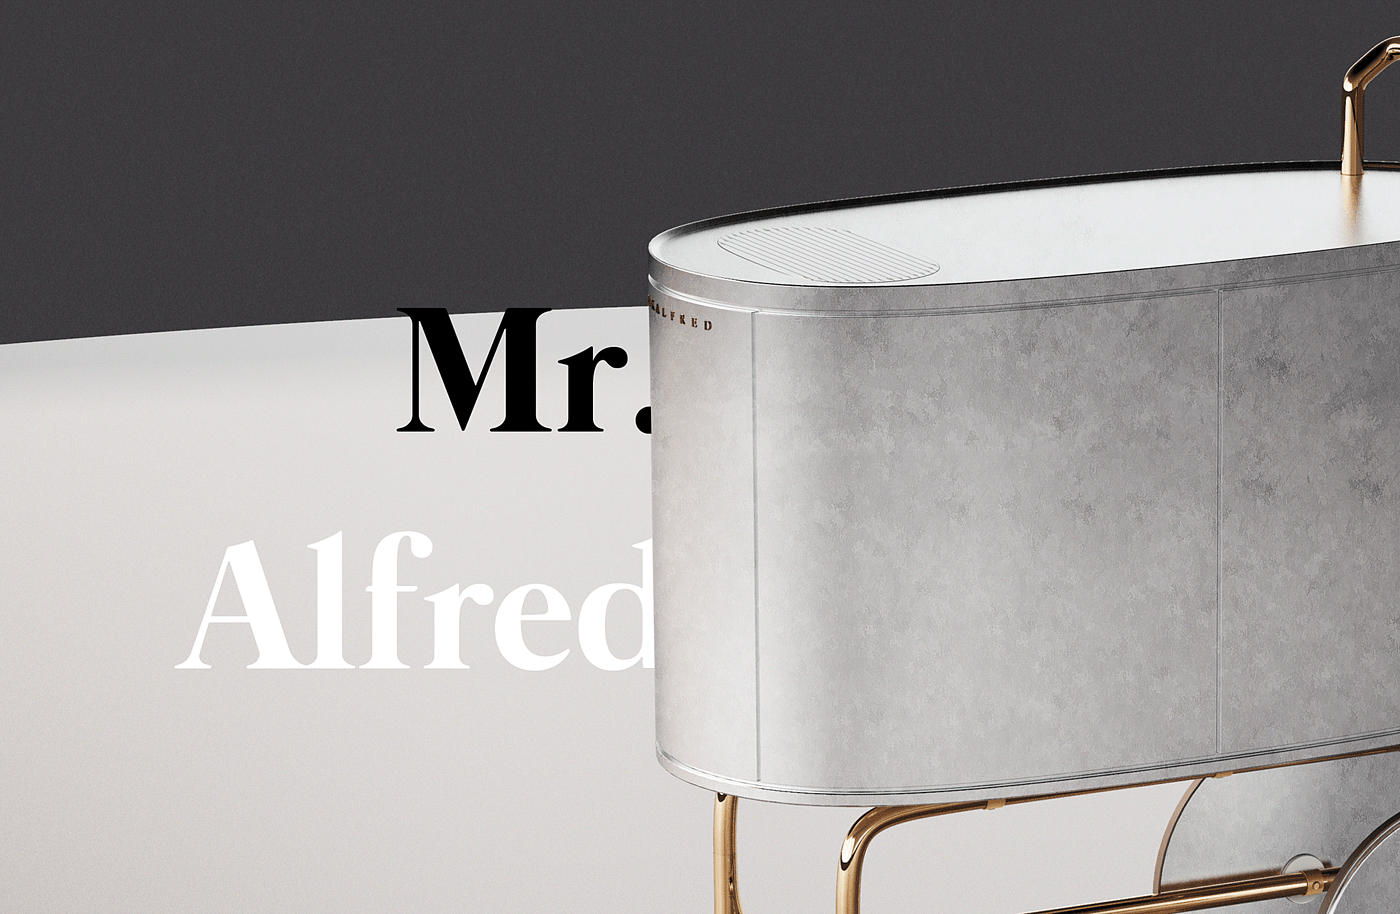 Mr.Alfred，智能，空气，净化，